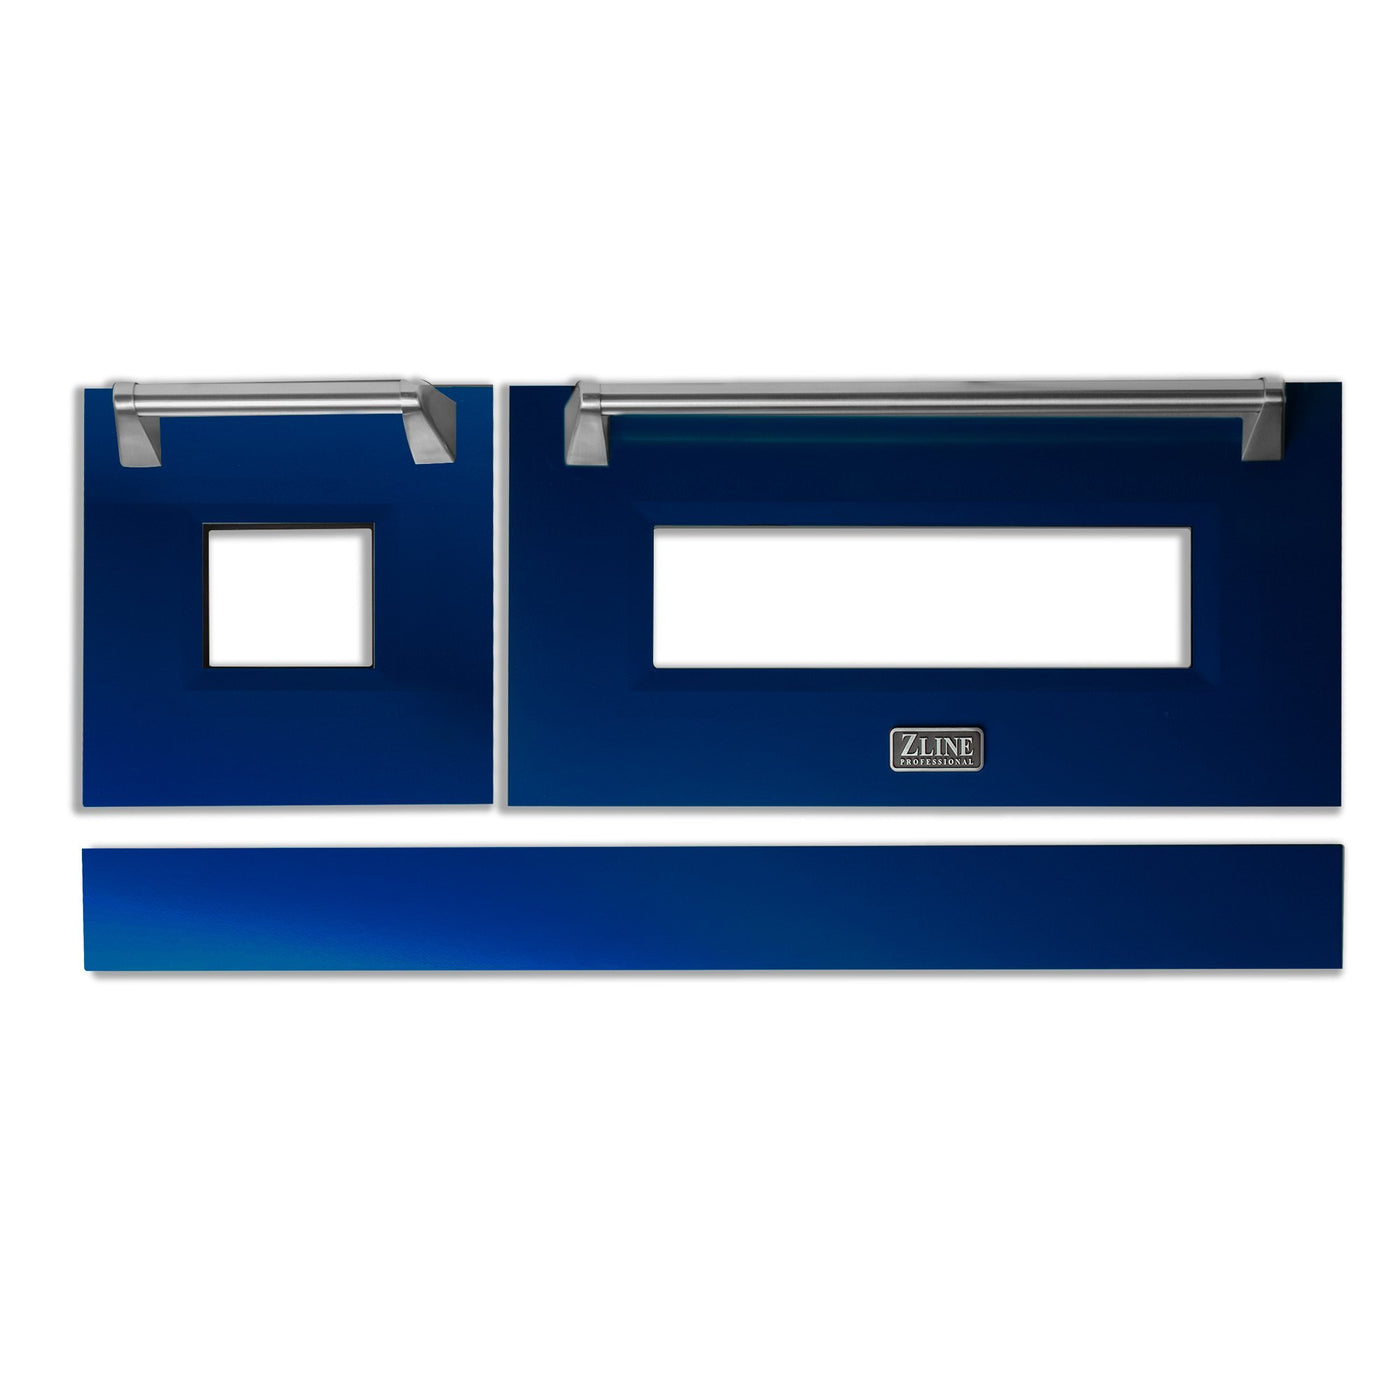 ZLINE Kitchen and Bath, ZLINE 48" Range Door in DuraSnow® Stainless Steel with Color Options, RA-DR-BG-48,